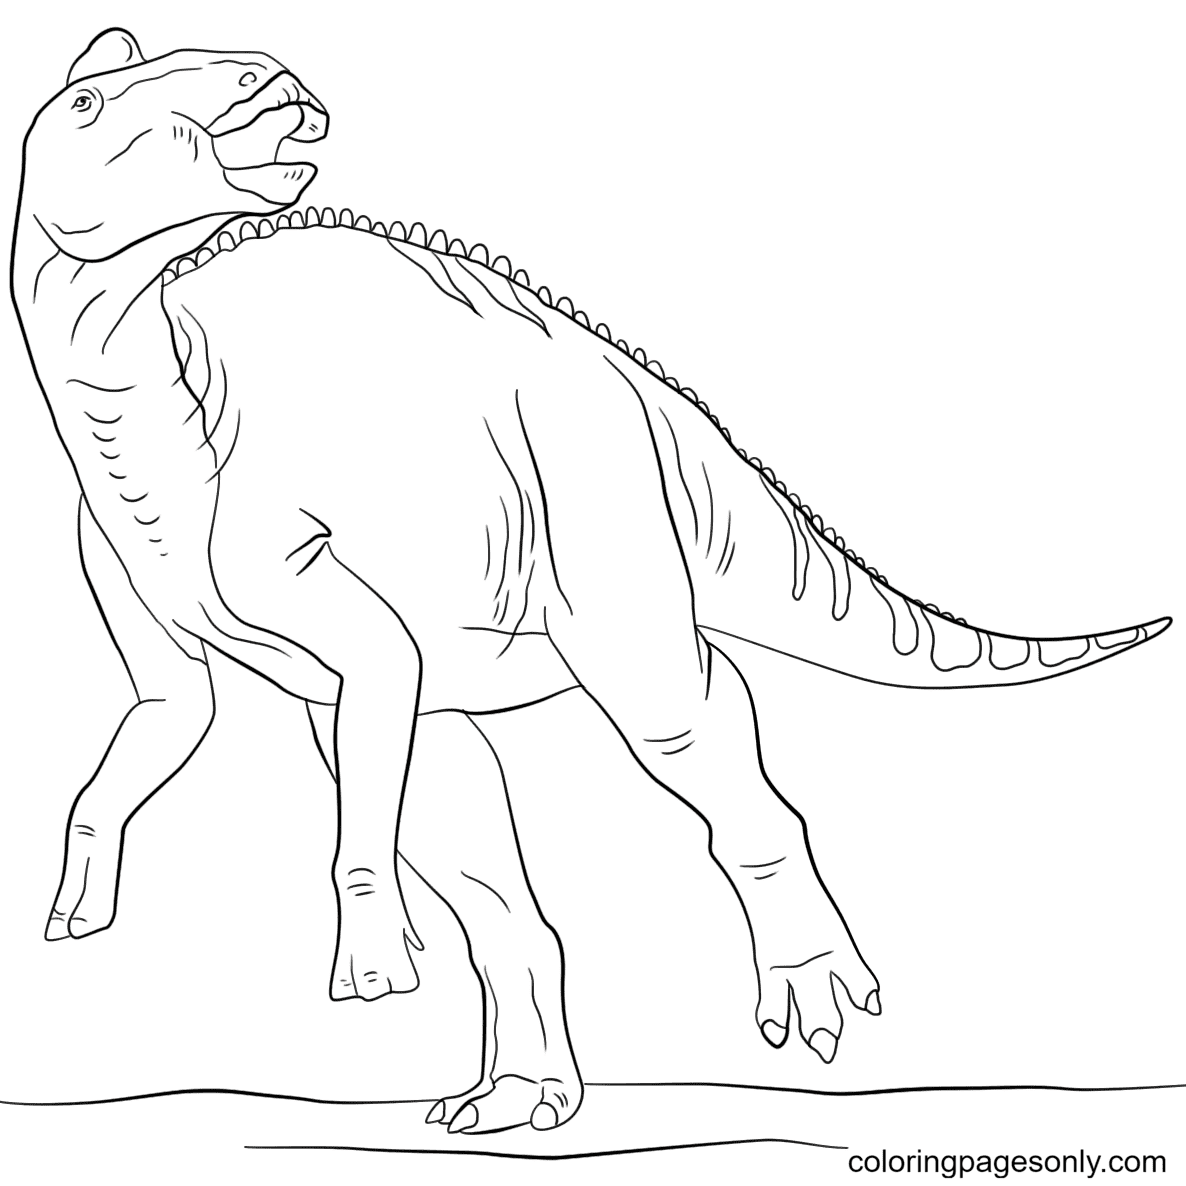 Pagina da colorare di Jurassic Park Edmontosaurus